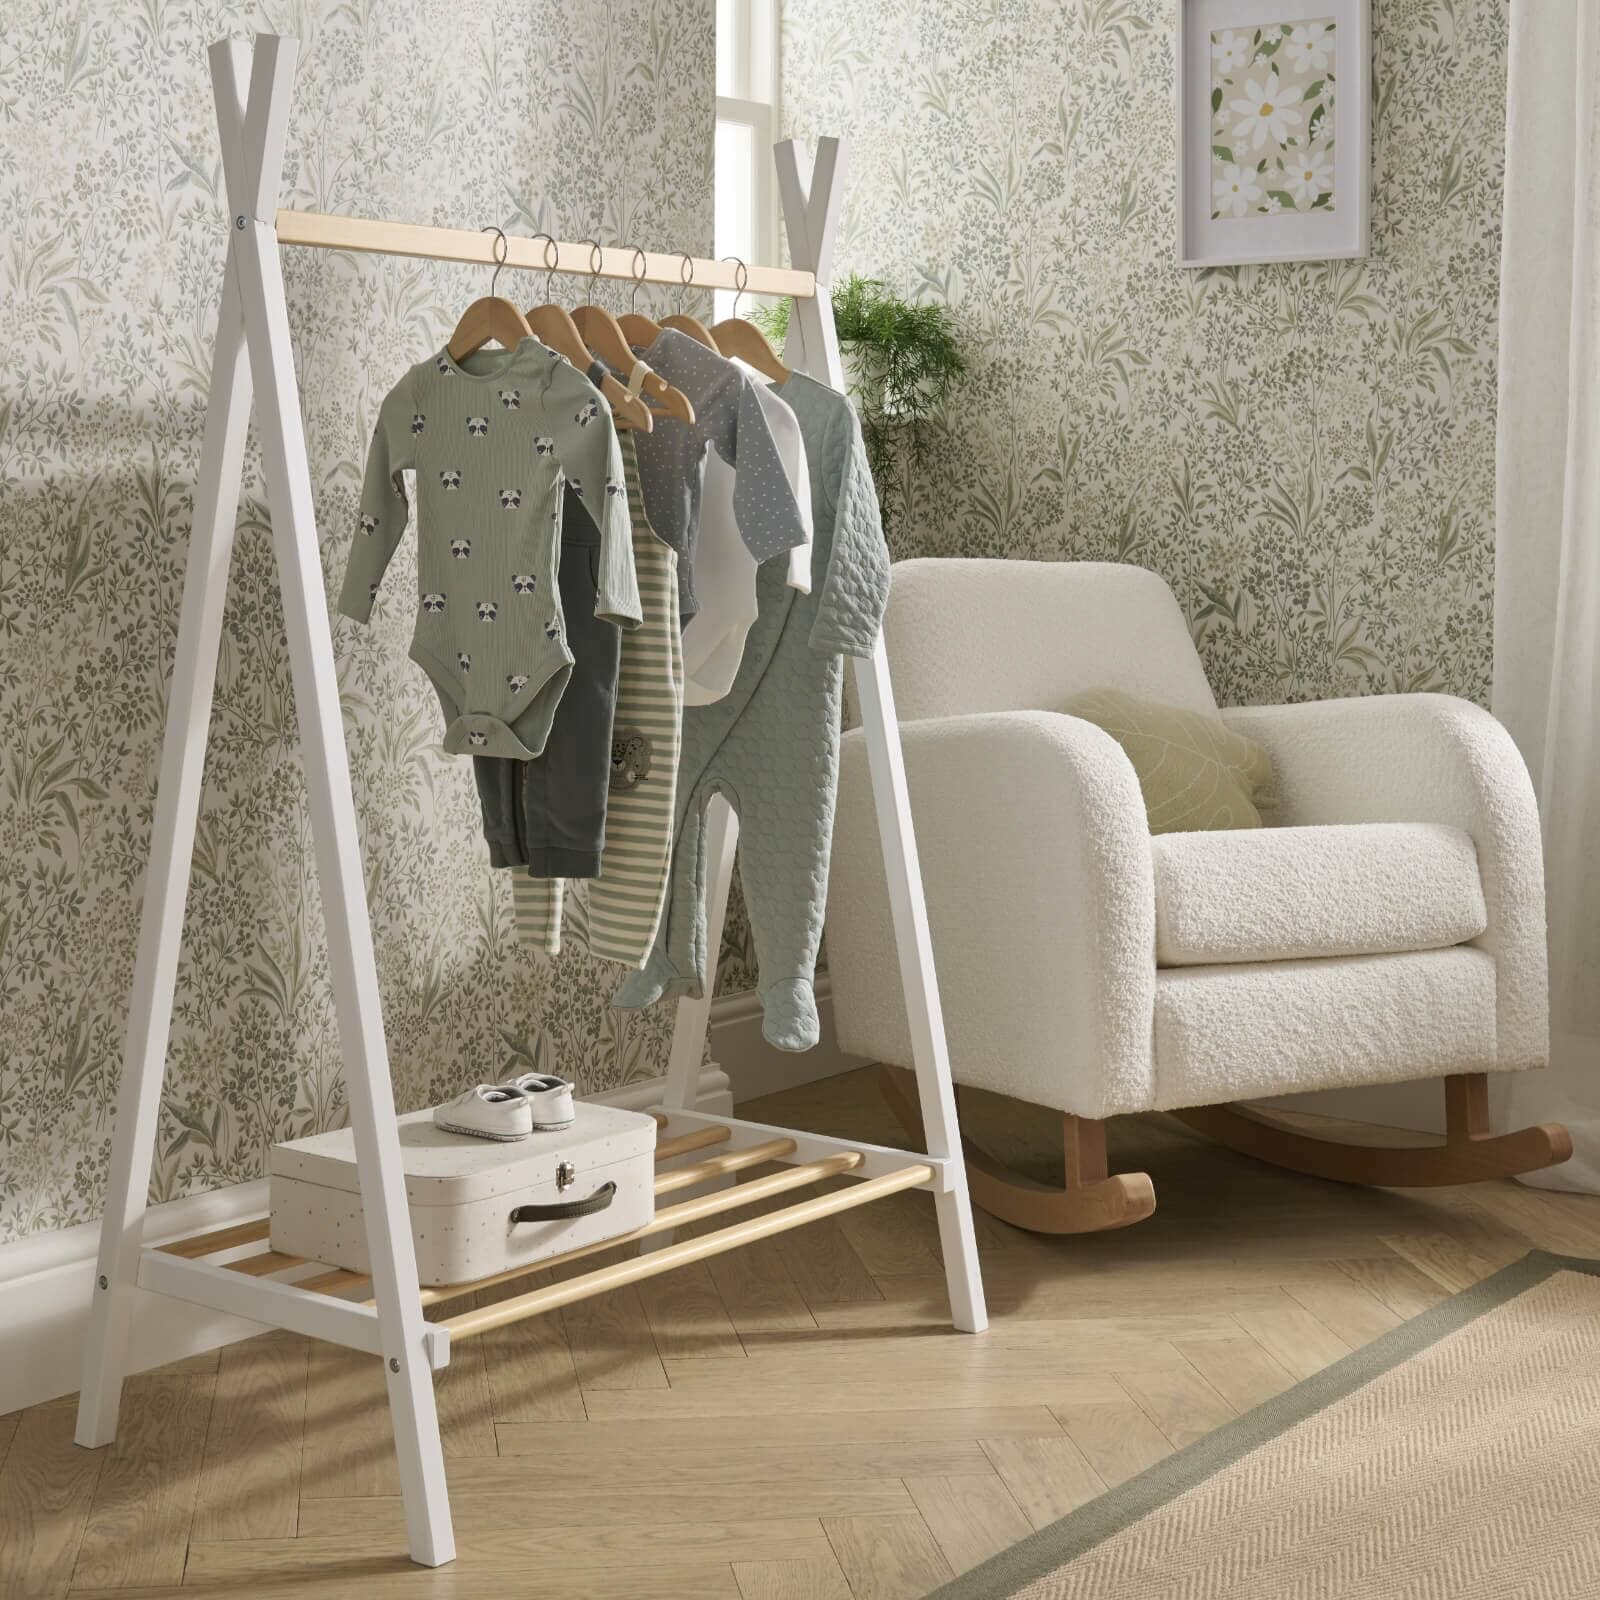 Nola Clothes Rail - White & Natural Furniture Singles CuddleCo 